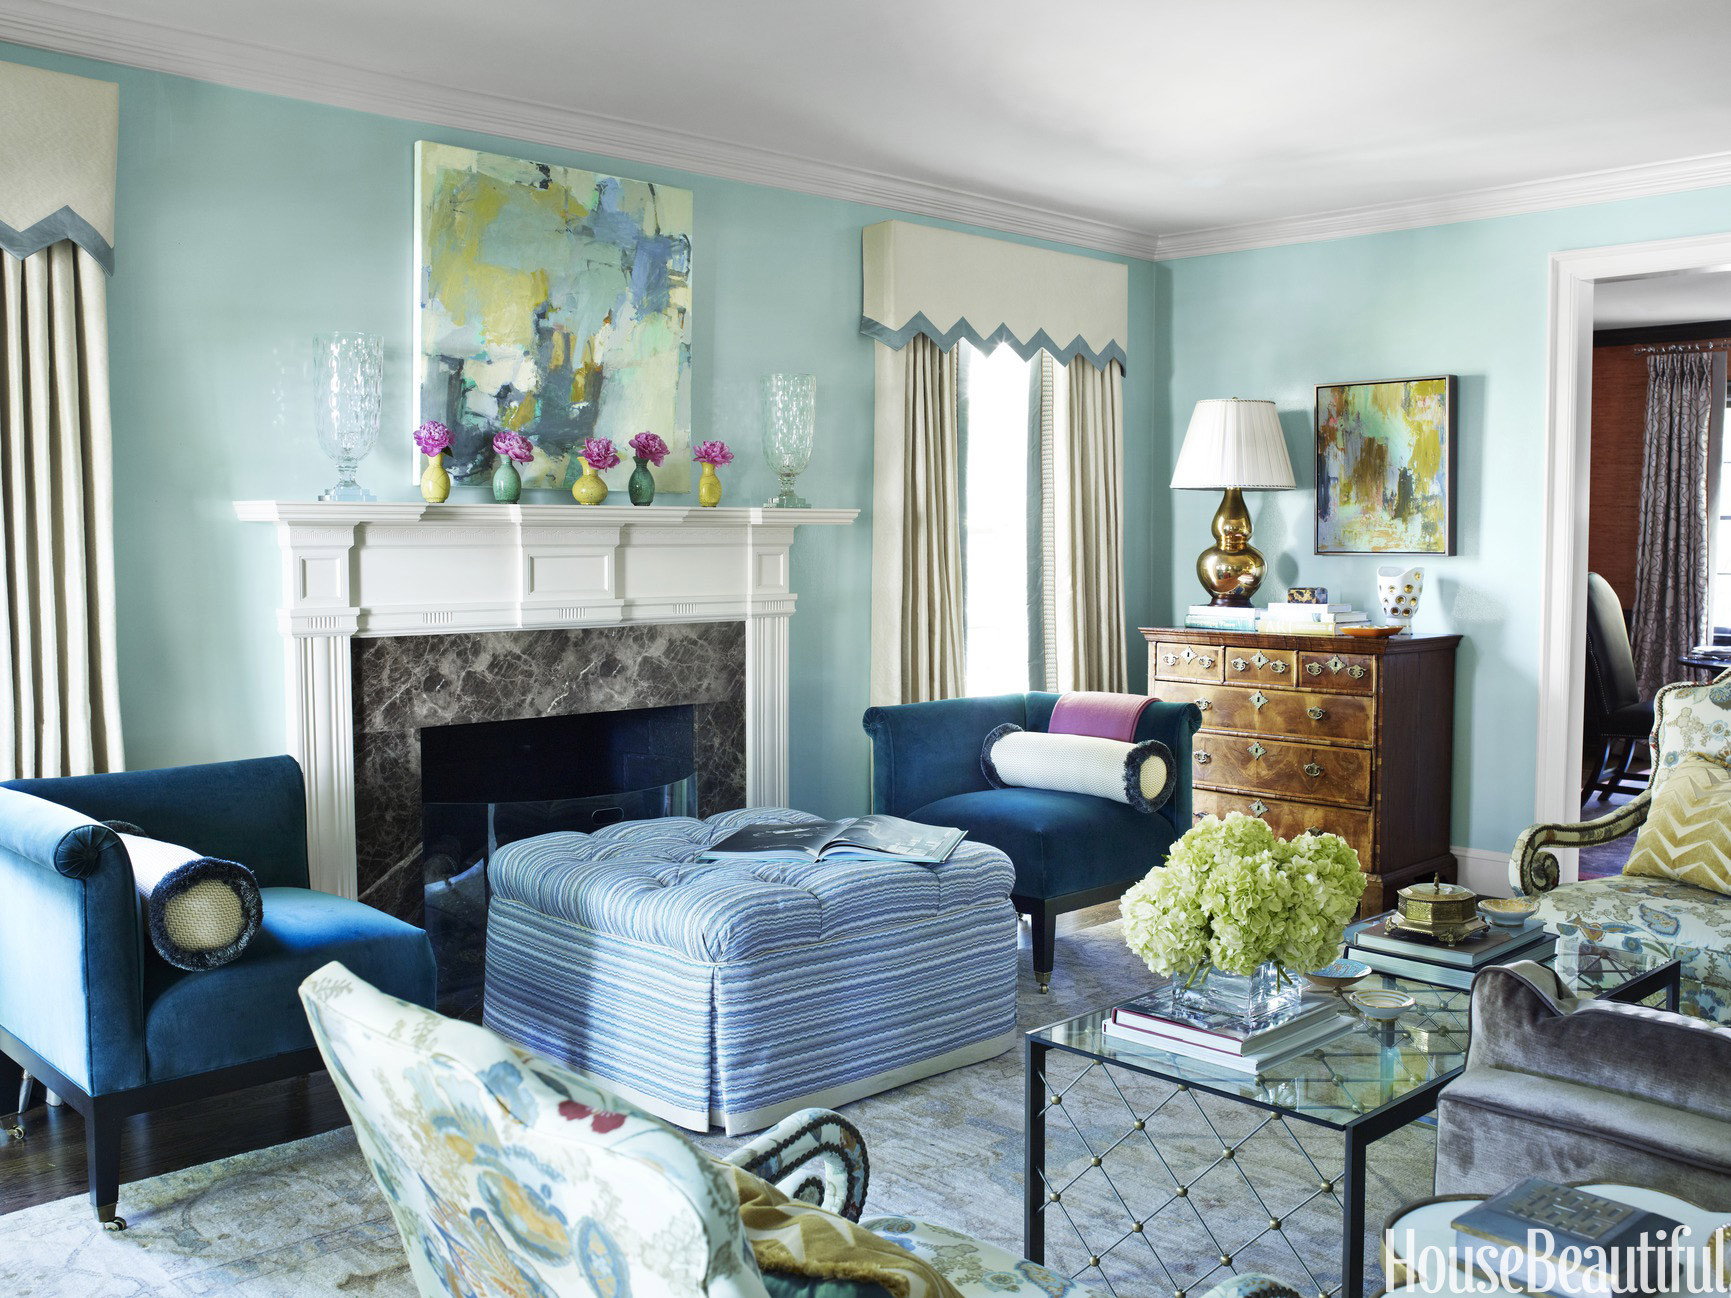 Top Living Room Paint Colors
 12 Best Living Room Color Ideas Paint Colors for Living